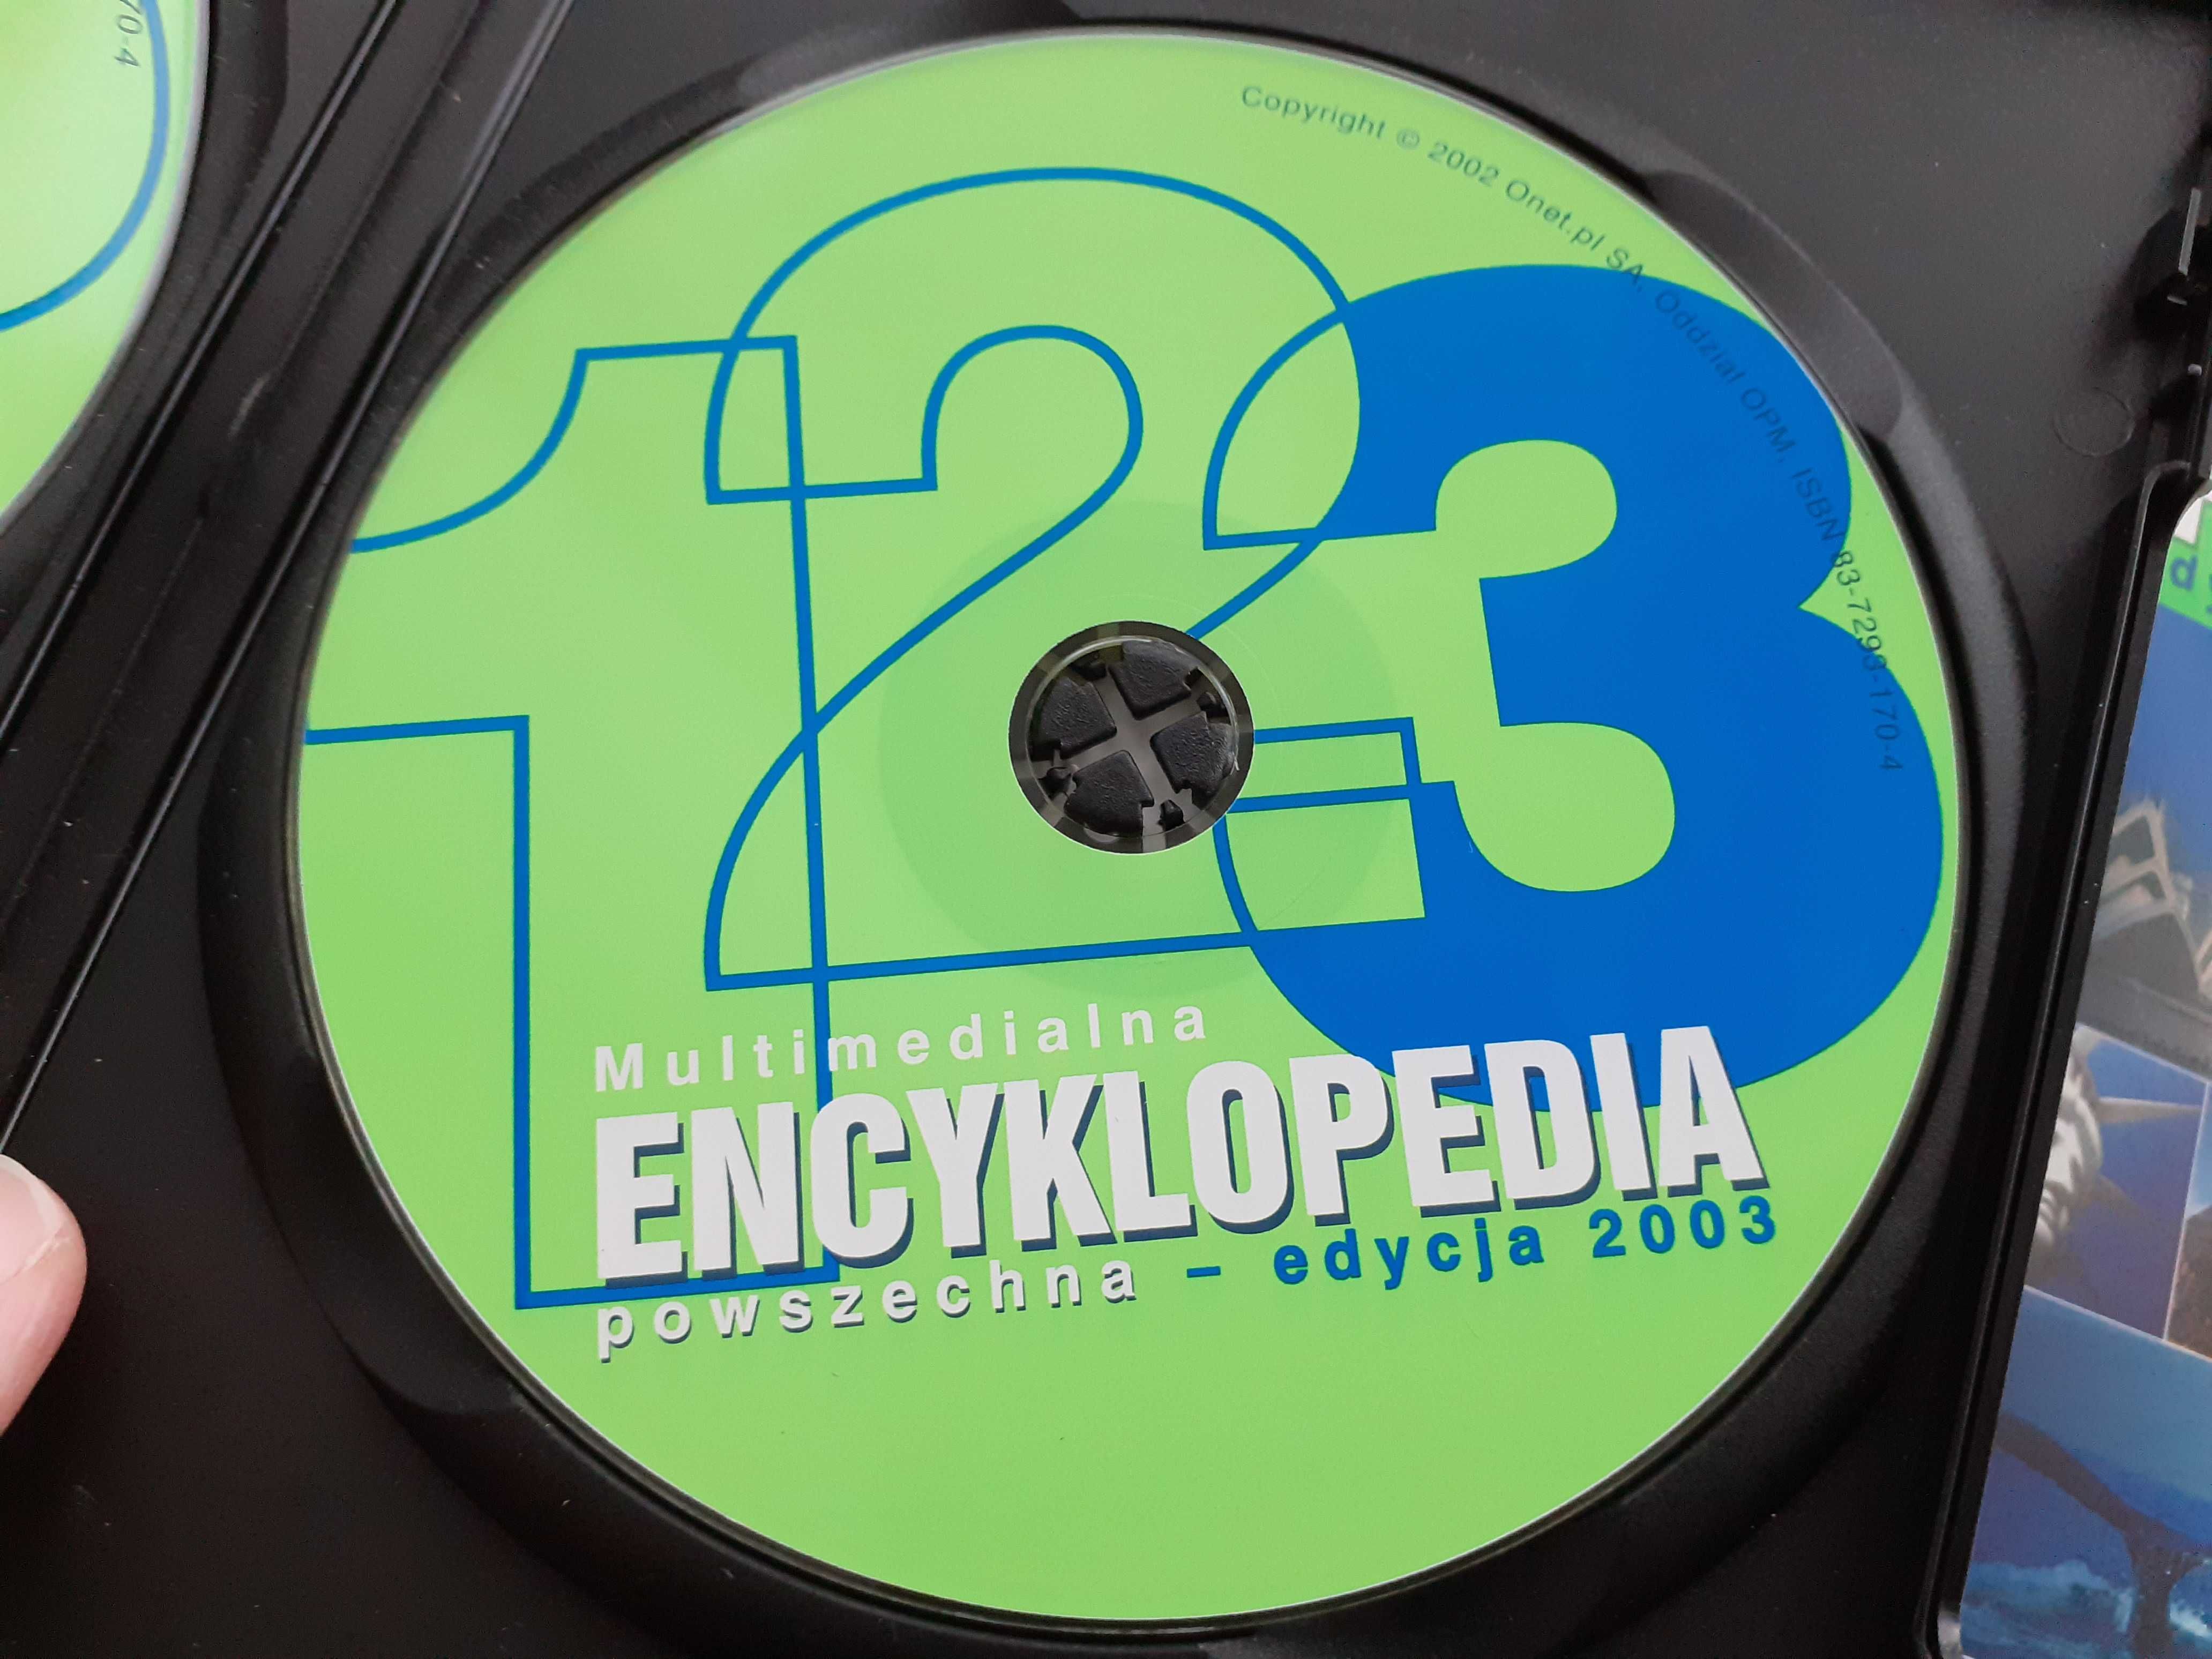 Multimedialna Encyklopedia Powszechna - edycja 2003